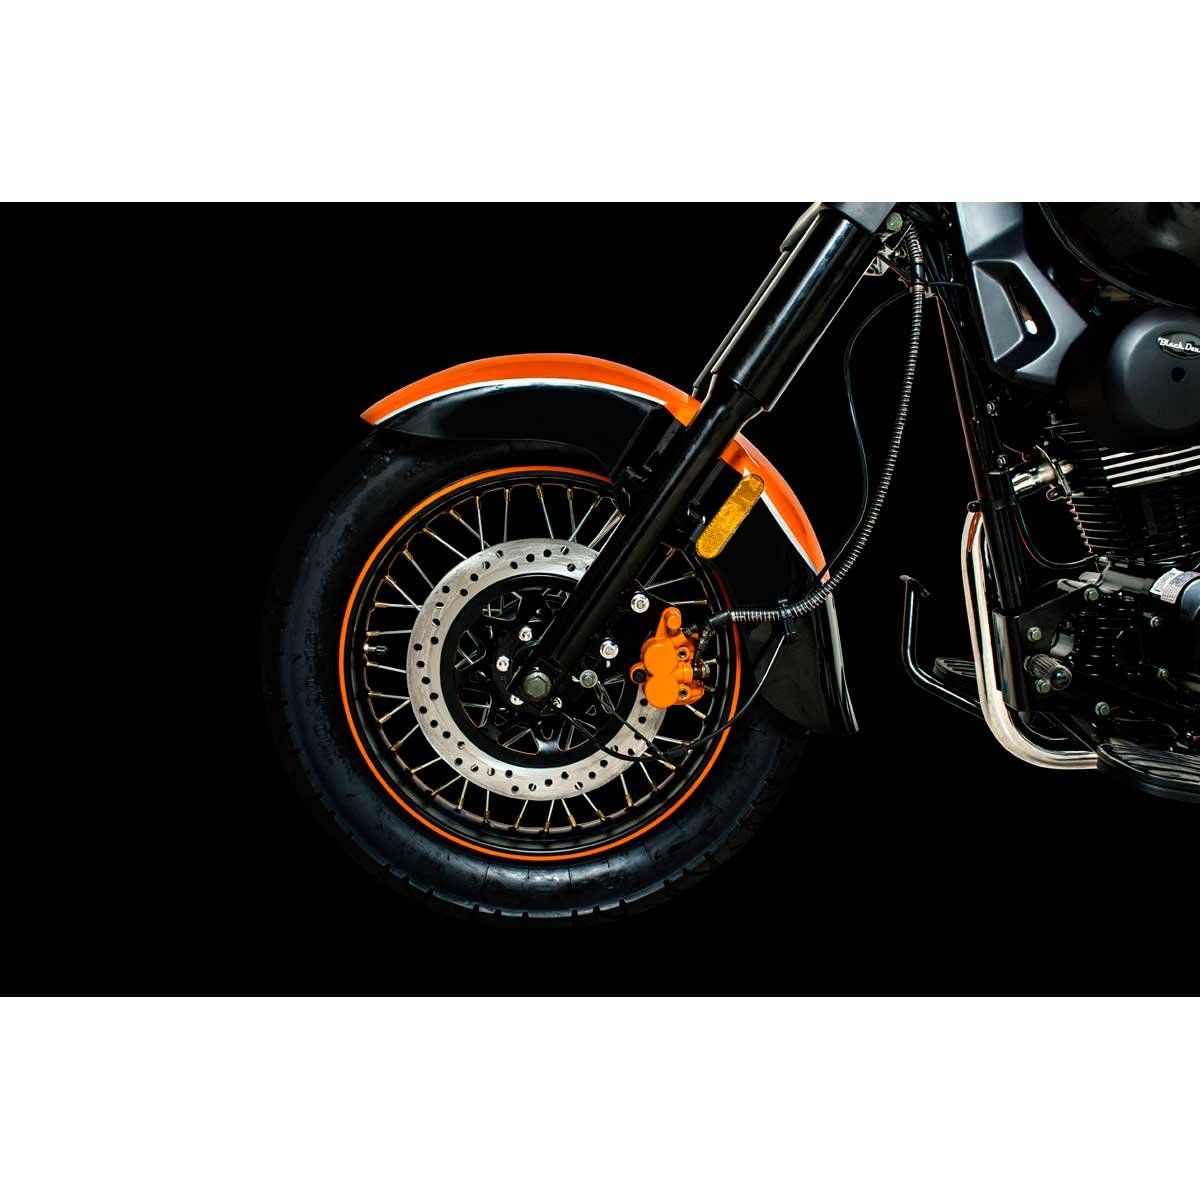 Motocicleta Black Devil Naranja 250Cc 2020 Mb